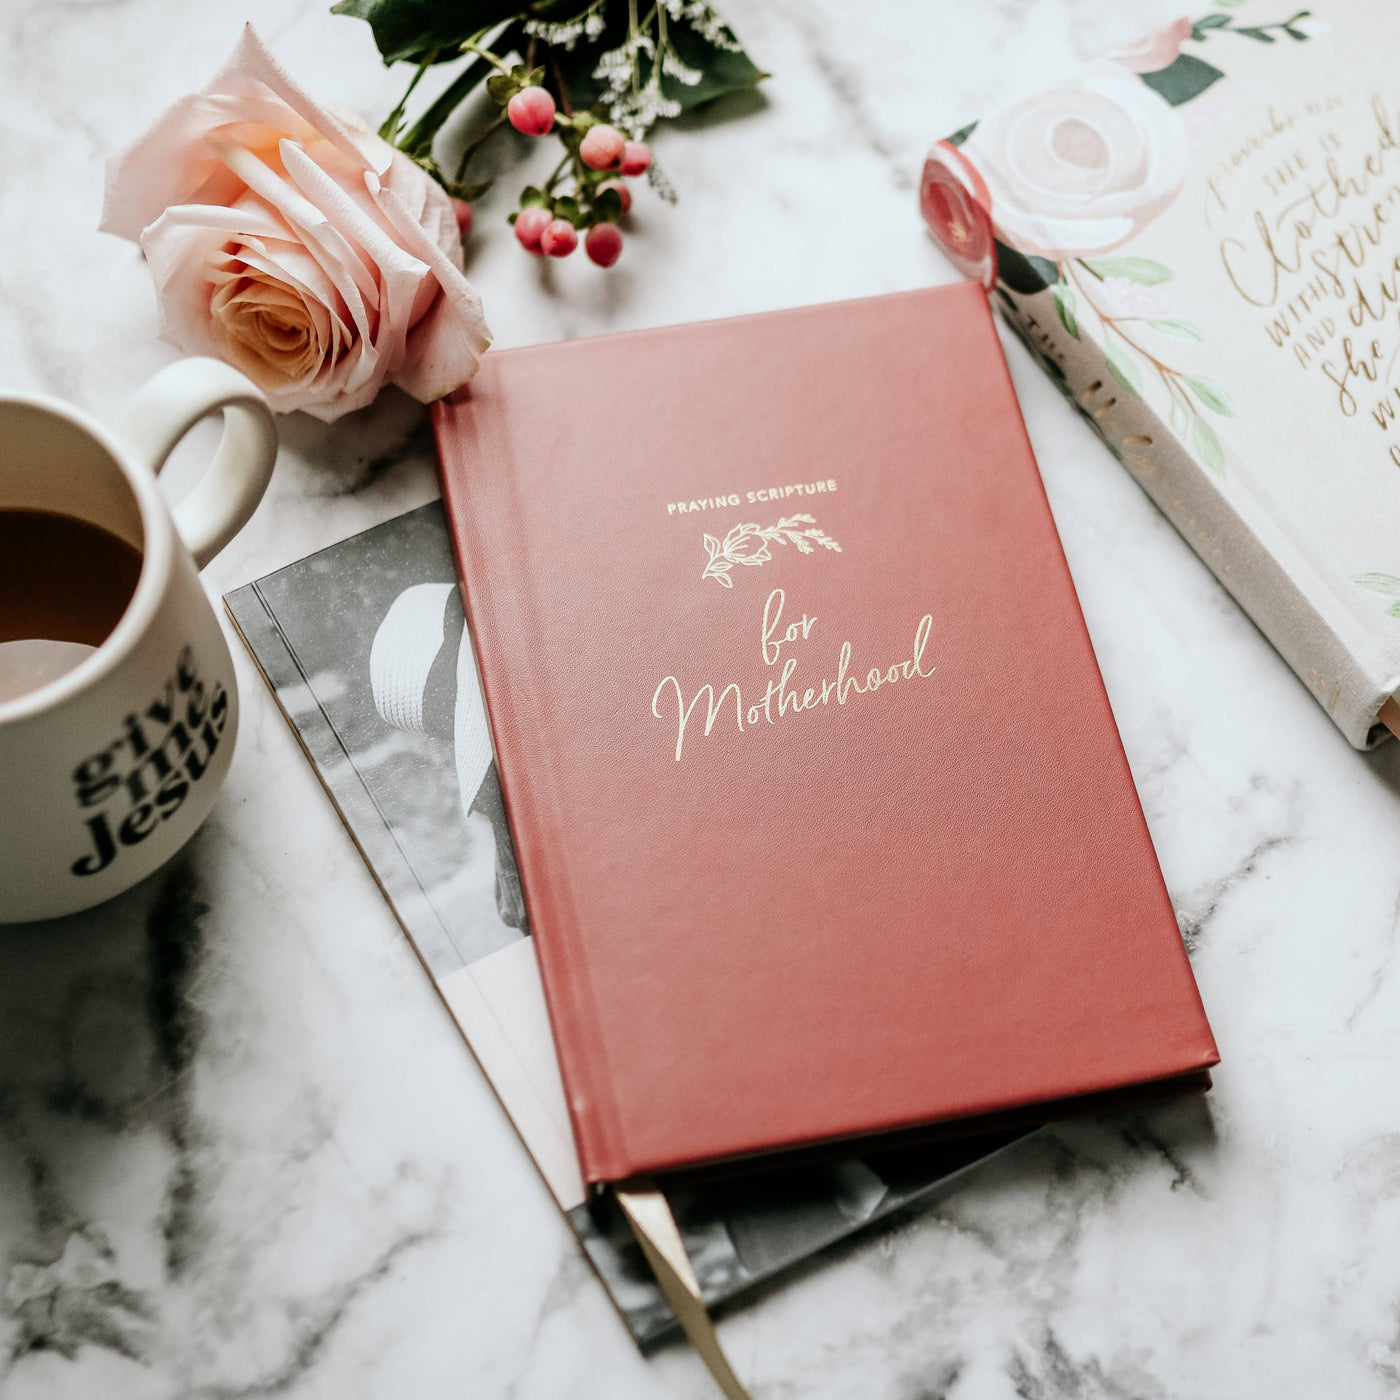 The DPraying Scripture for Motherhood Journal